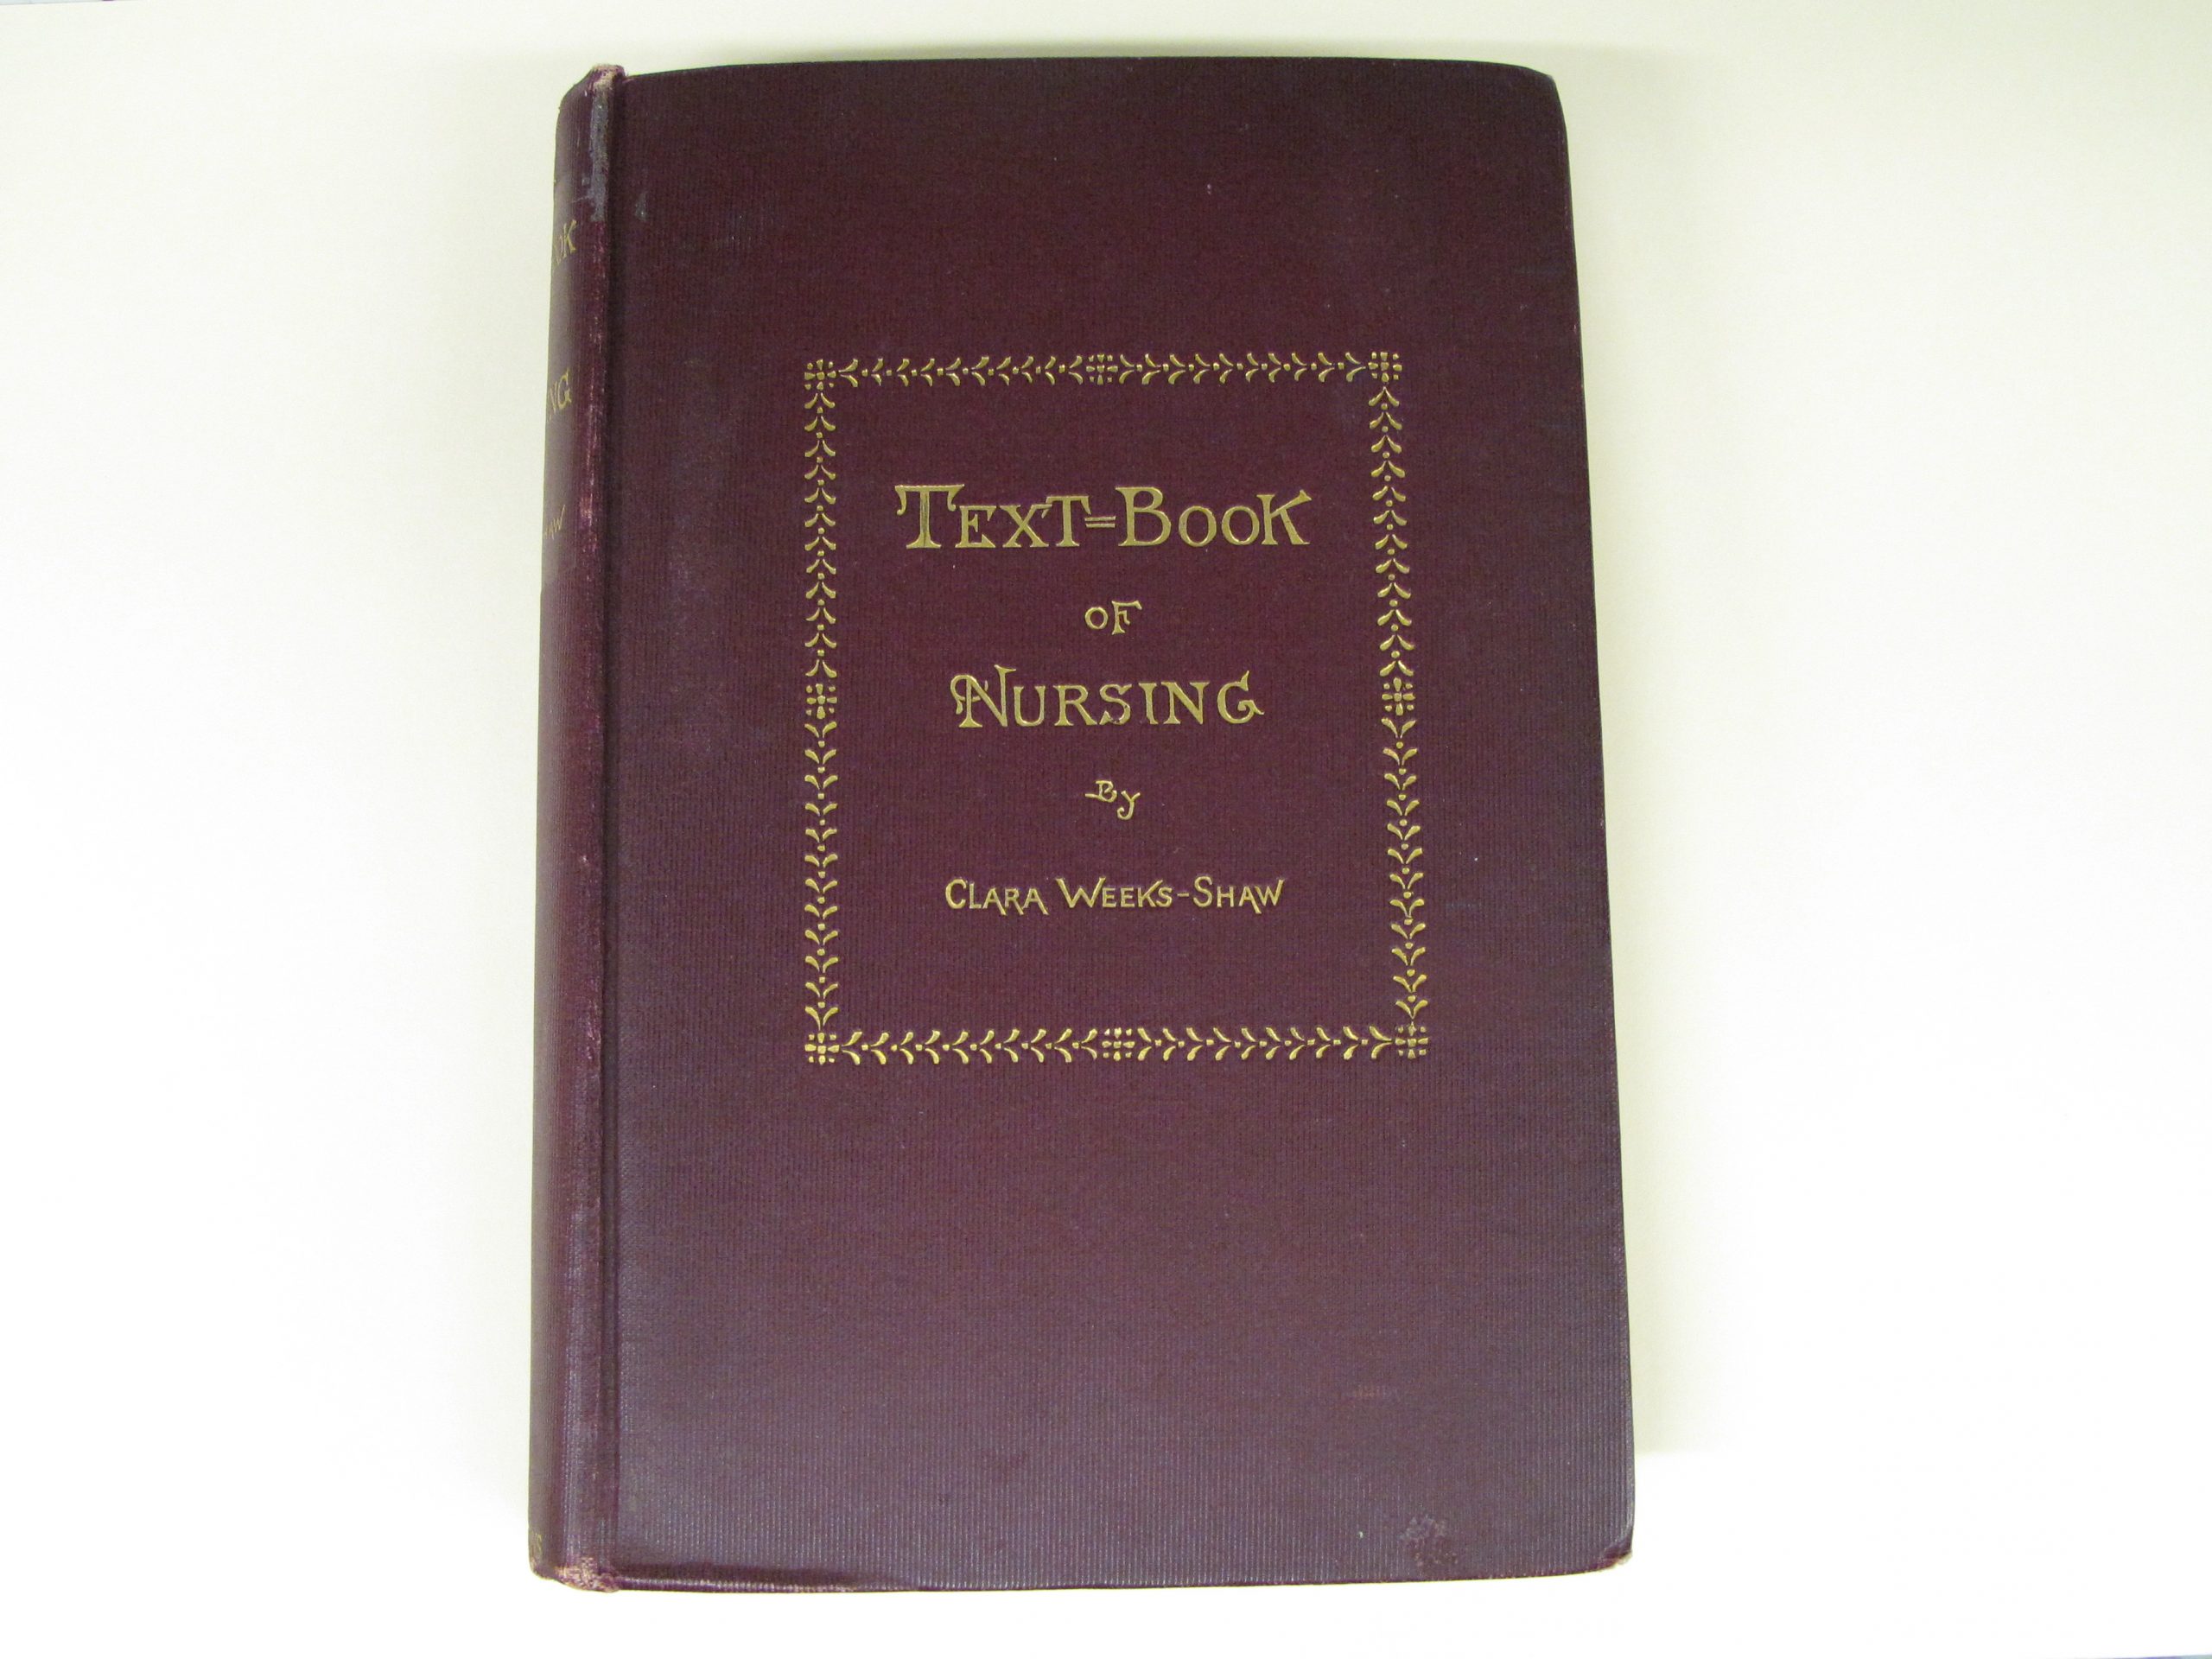 EUL MS 472/NEHC/6/1/8 'A Text-Book of Nursing' by Clara Weeks-Shaw (1888)